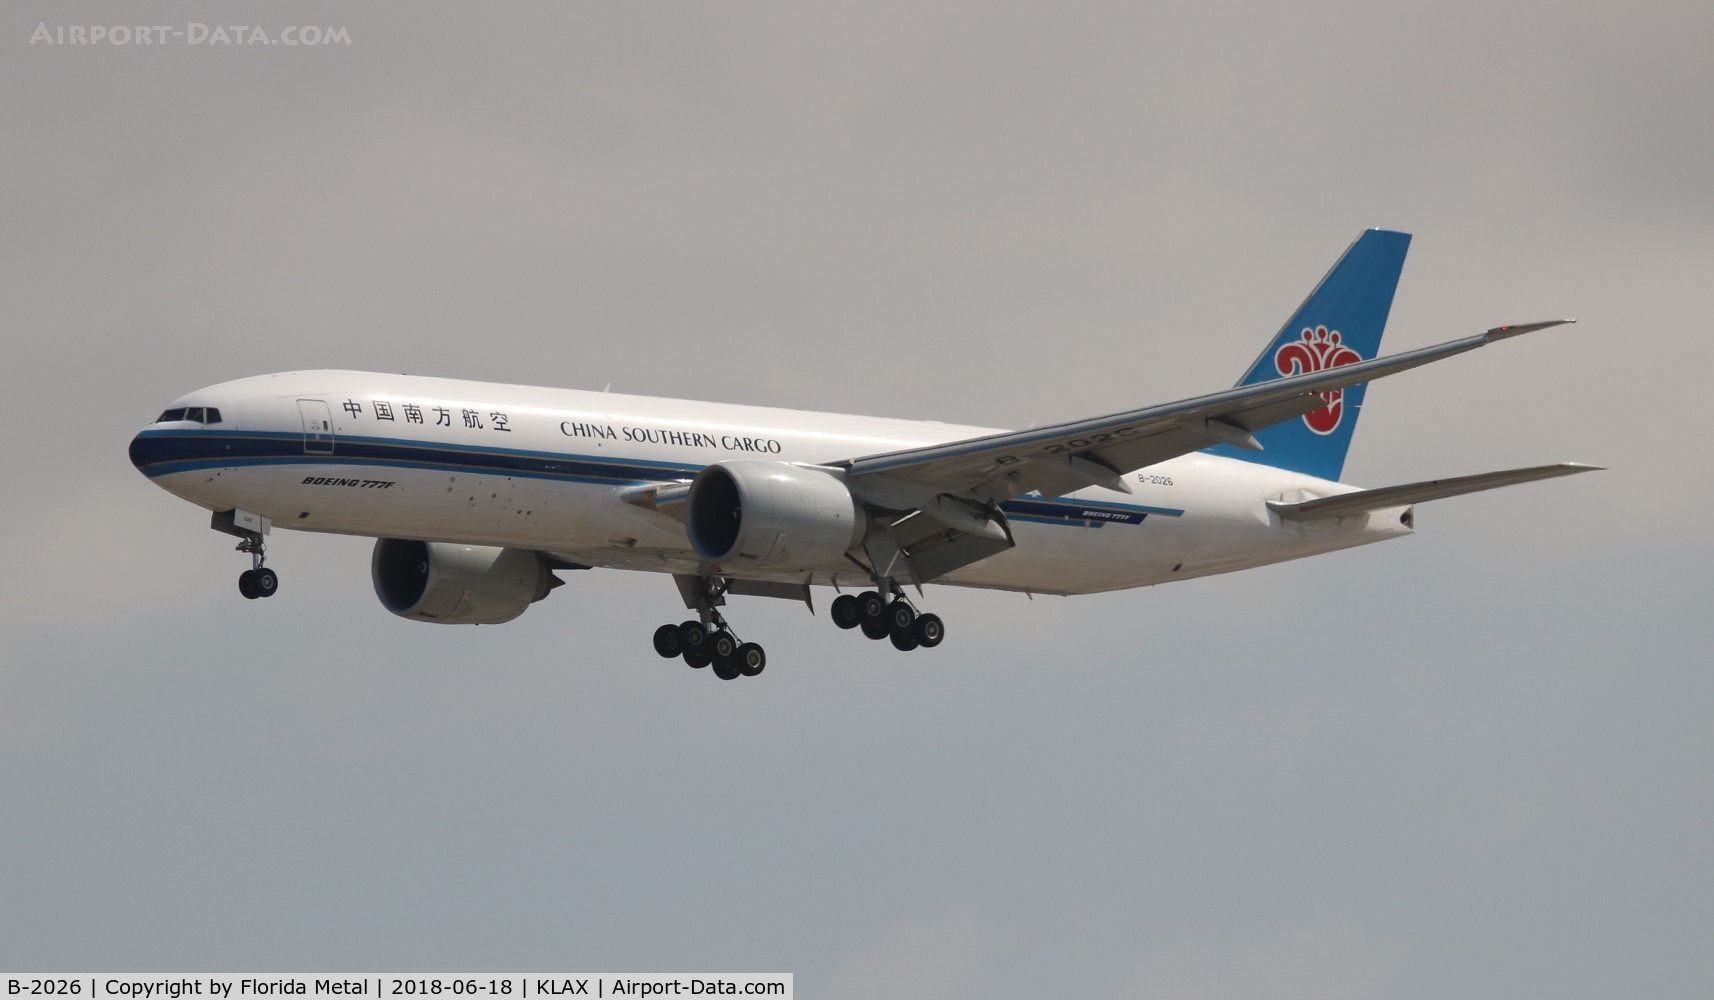 B-2026, 2015 Boeing 777-F1B C/N 41635, LAX spotting